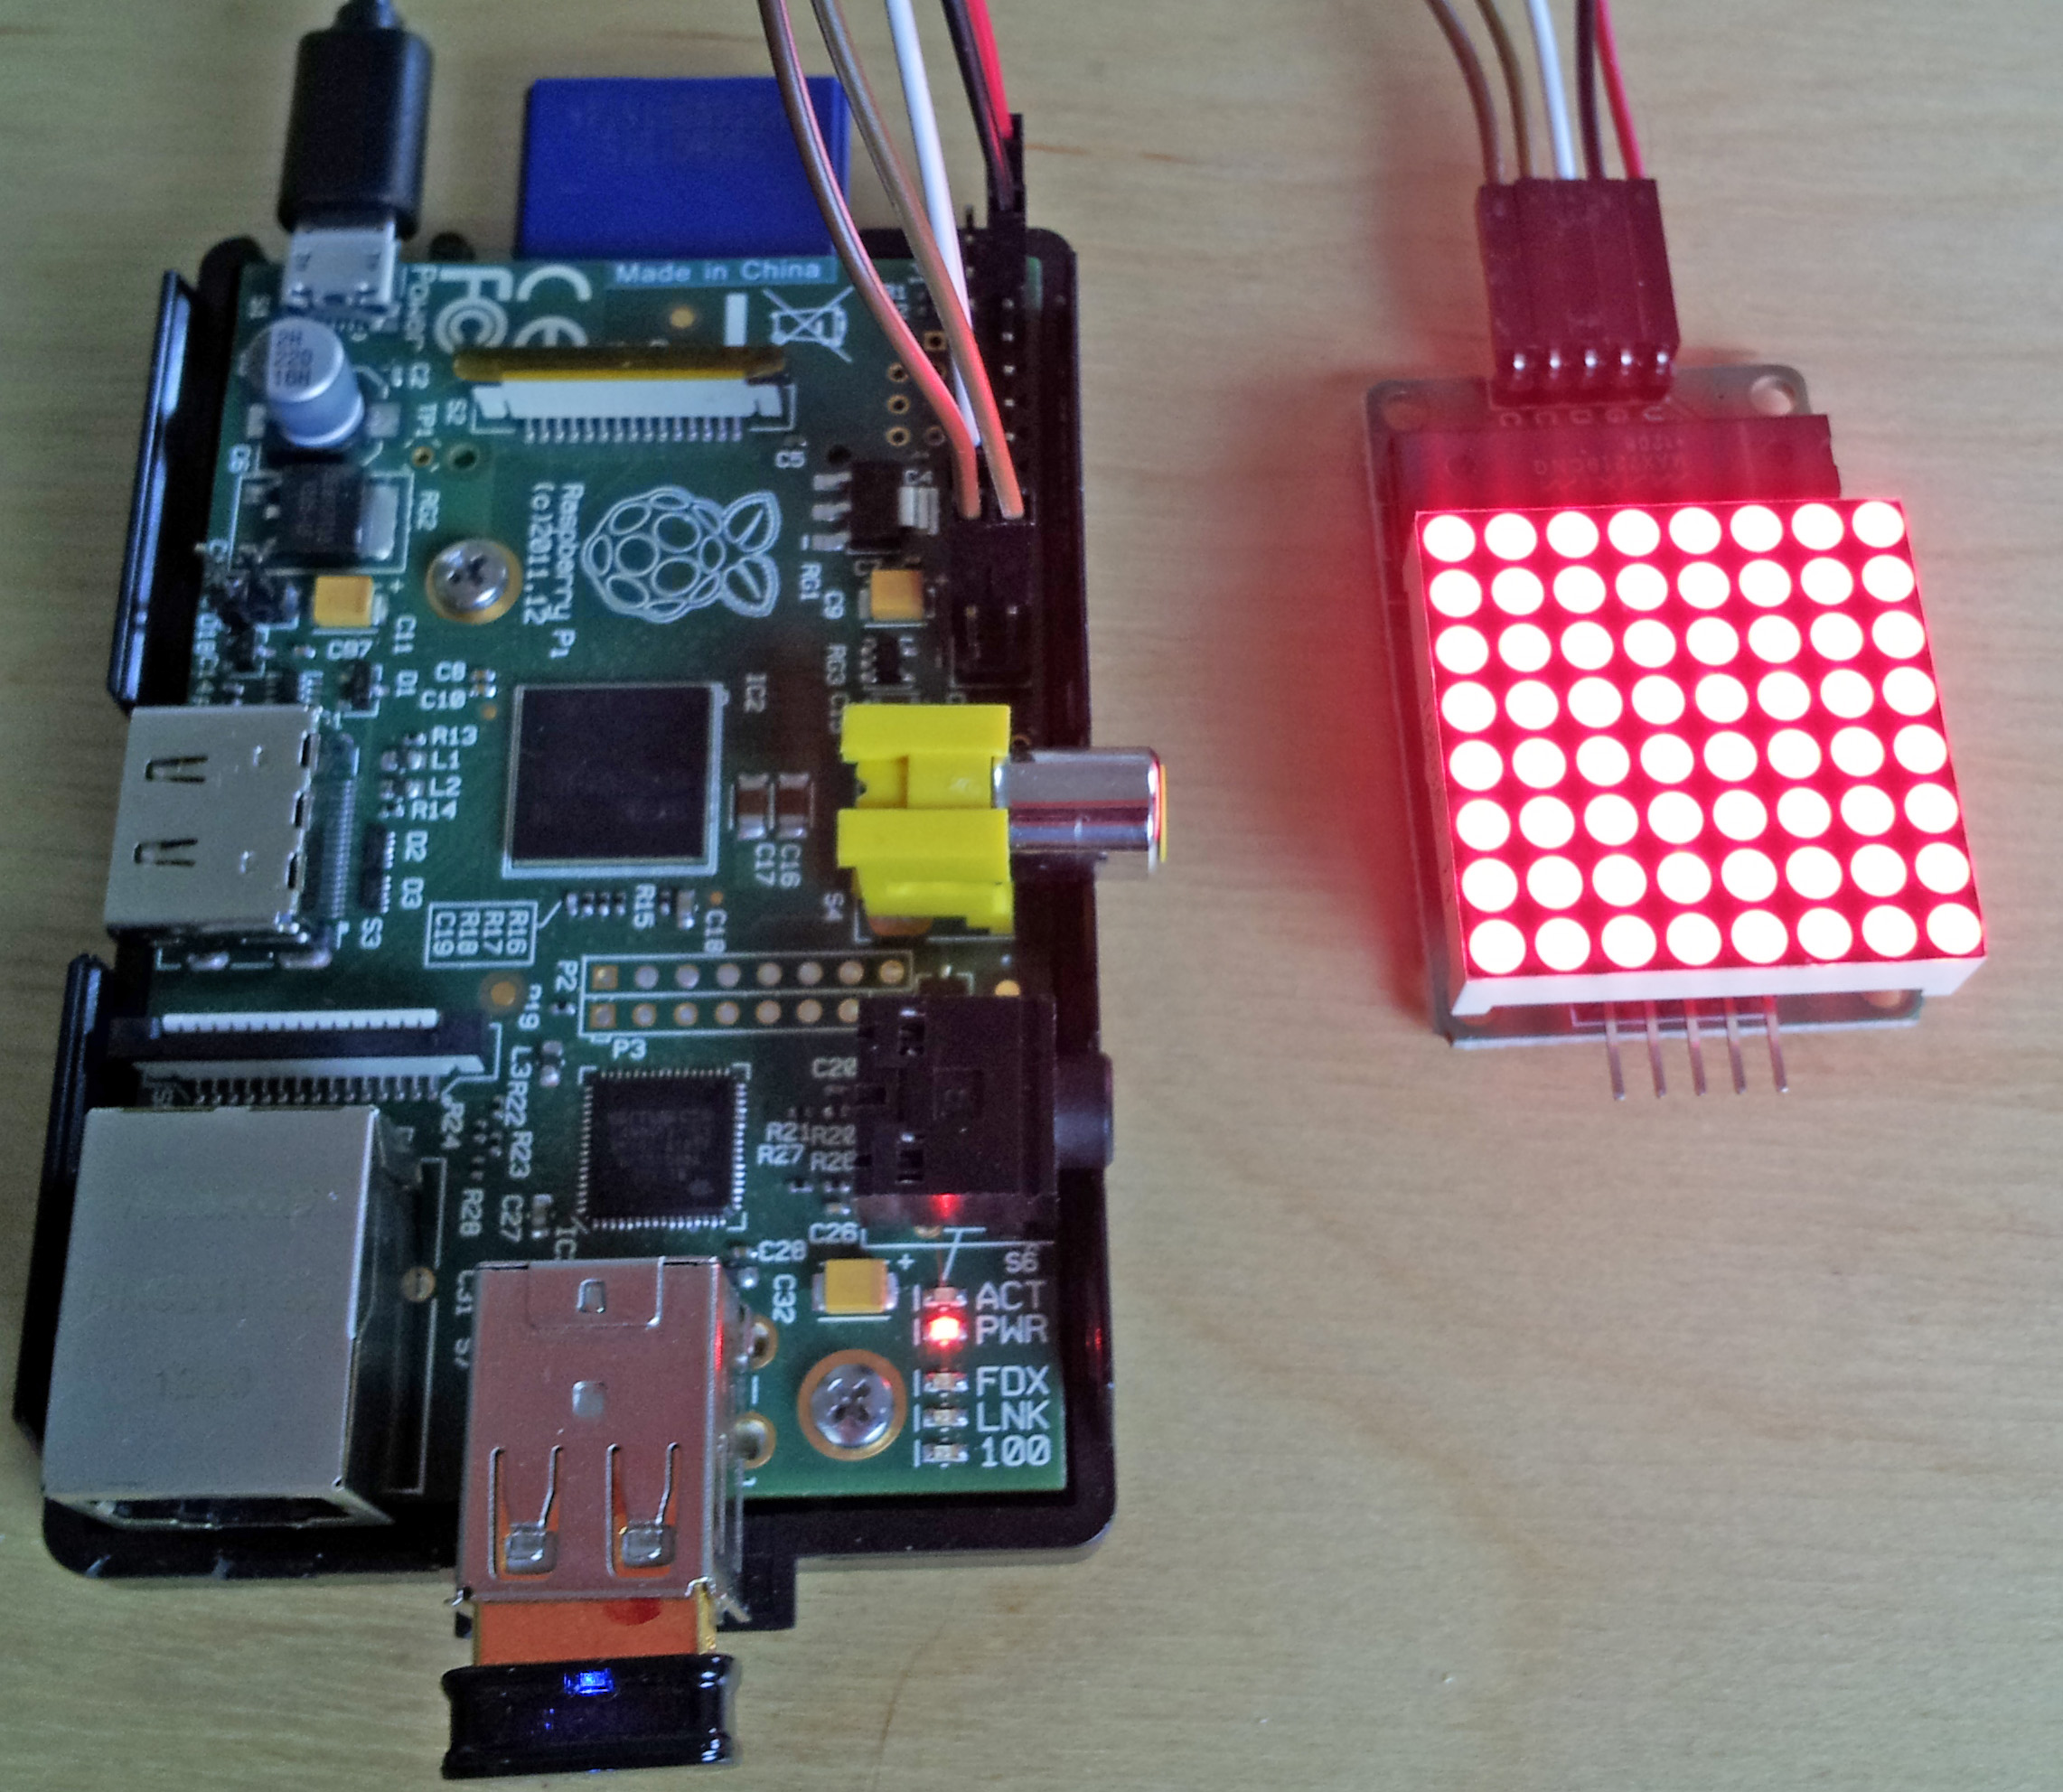 Play Retro Games With This Raspberry Pi-Powered LED Matrix